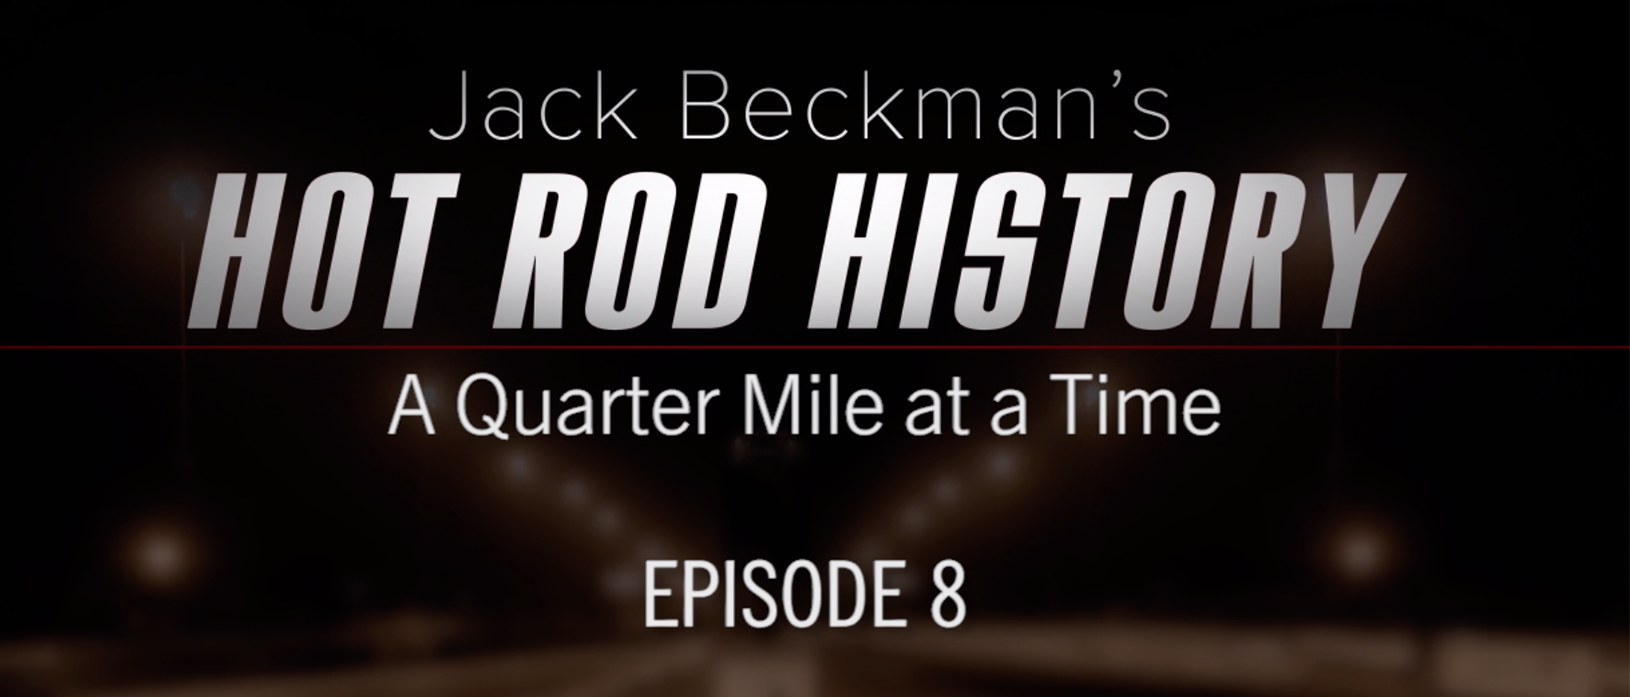 Jack Beckman’s Hot Rod History a Quarter-Mile at a Time – Episode 8